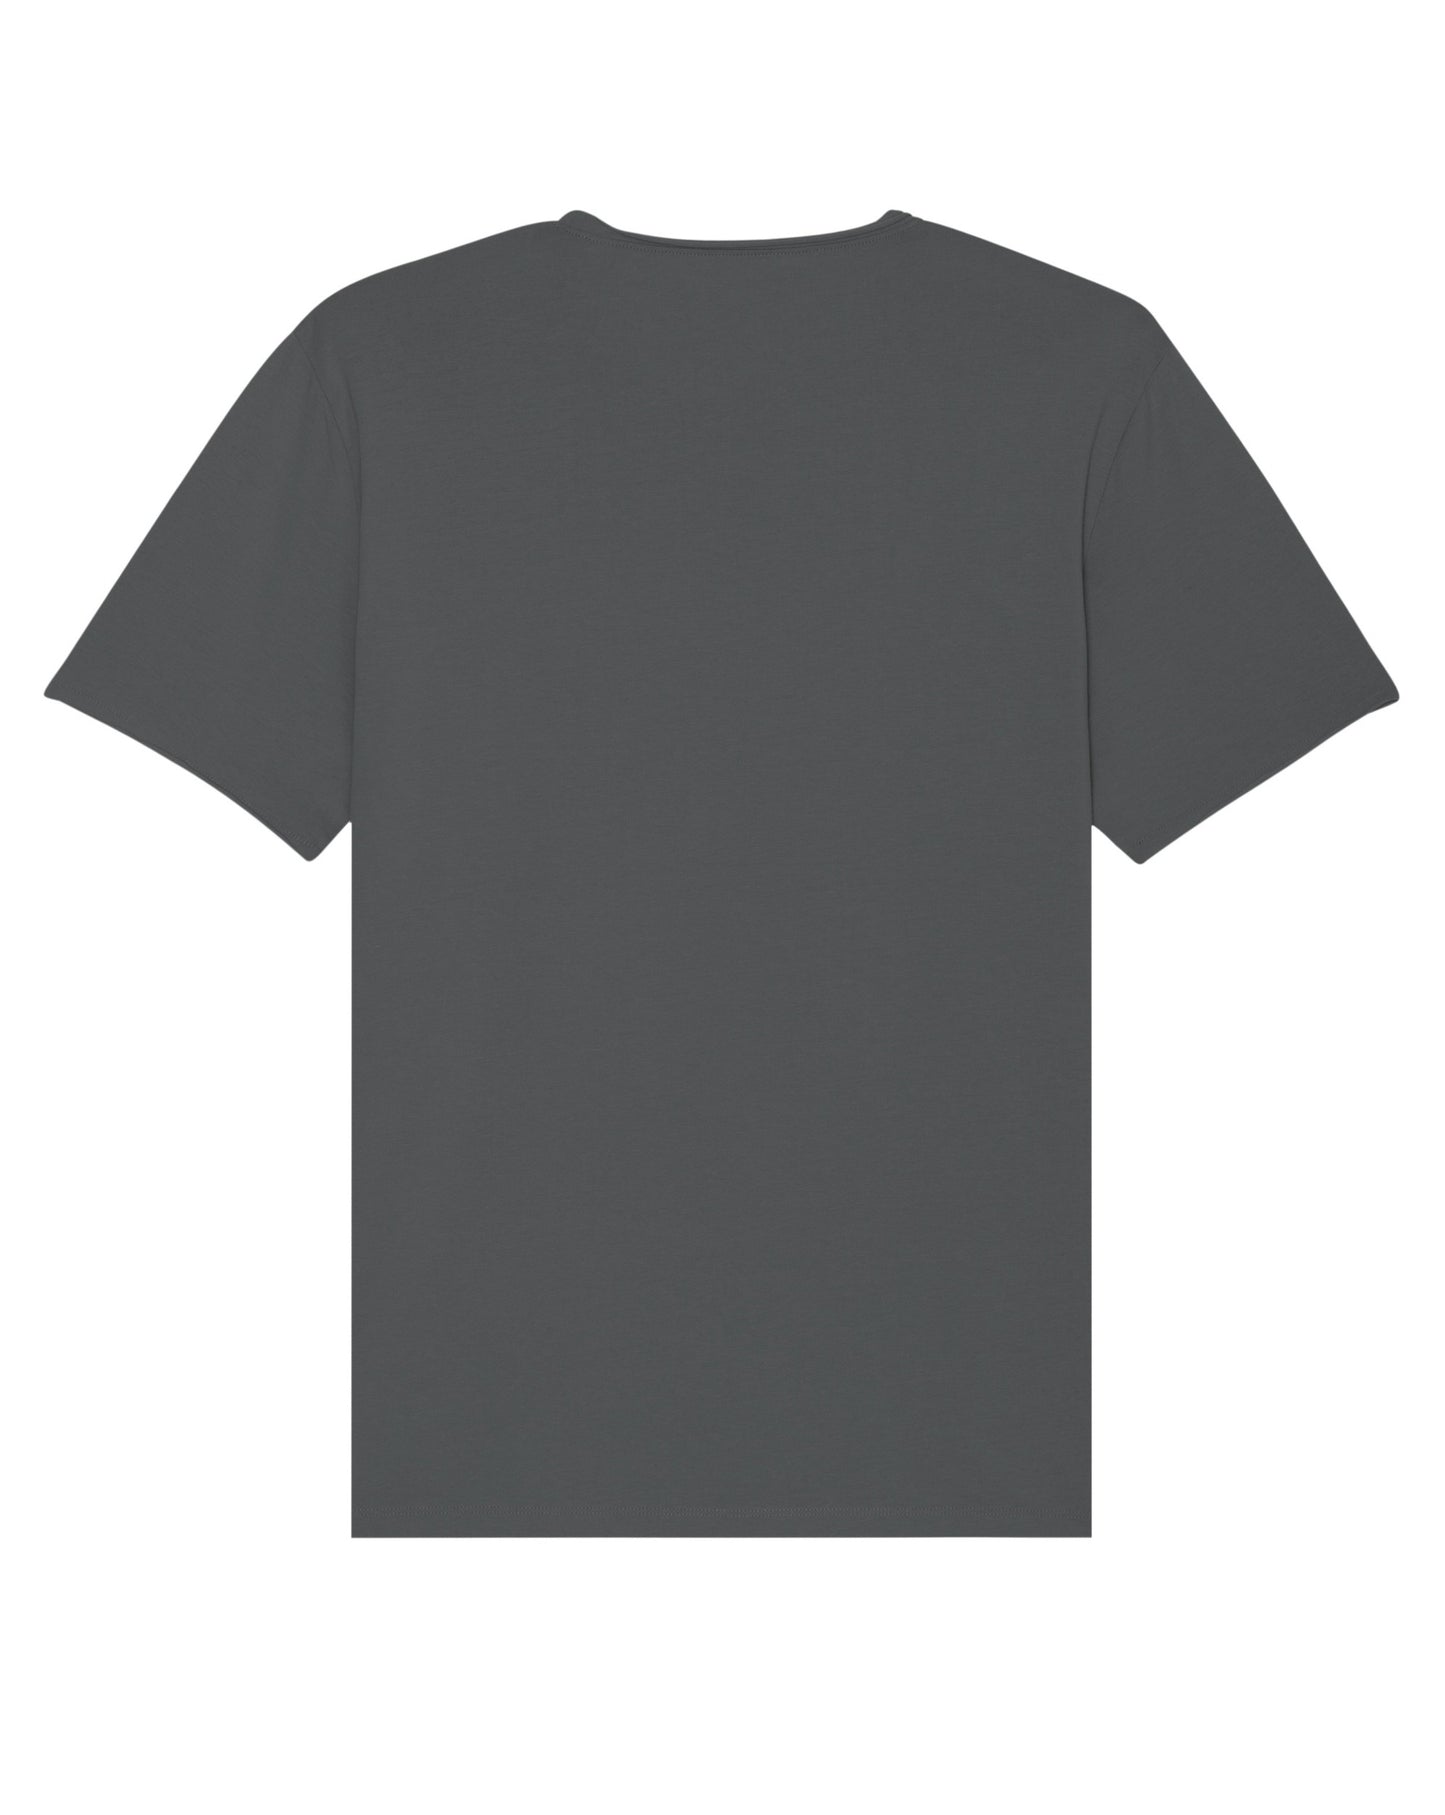 Hang Ten Raw Surfer T-shirt - Anthracite Grey